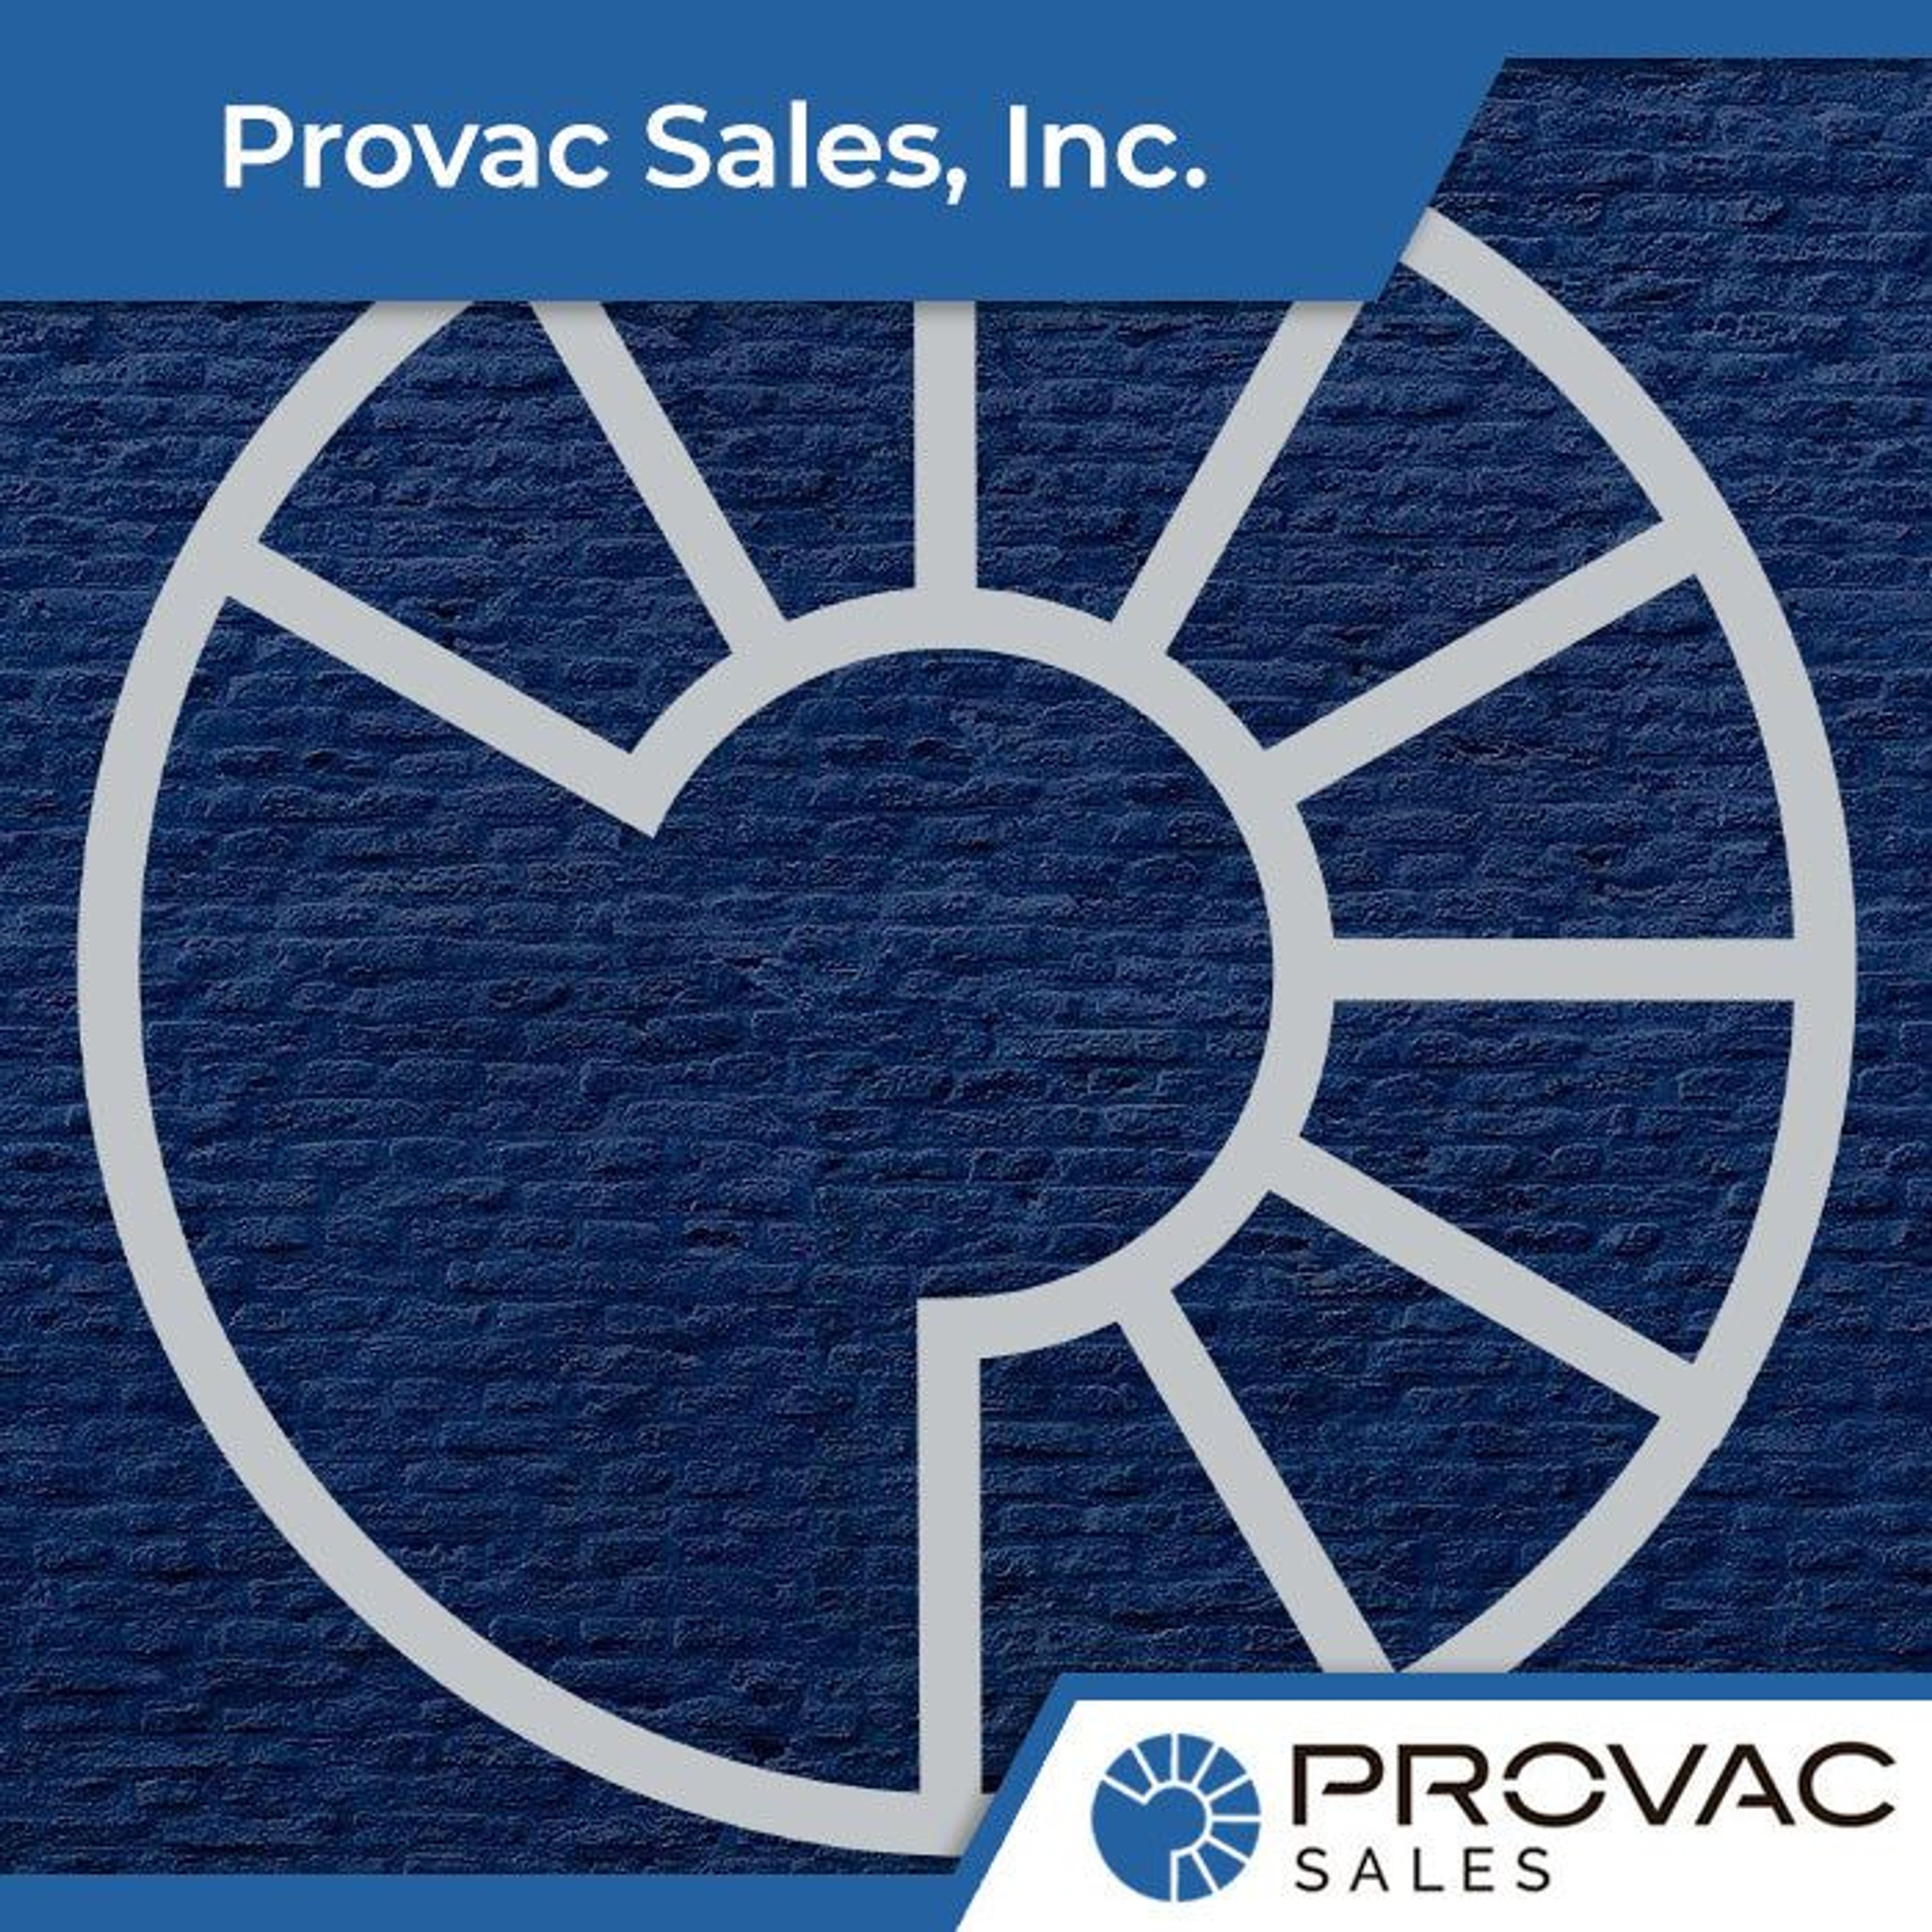 Provac Sales, Inc. Background